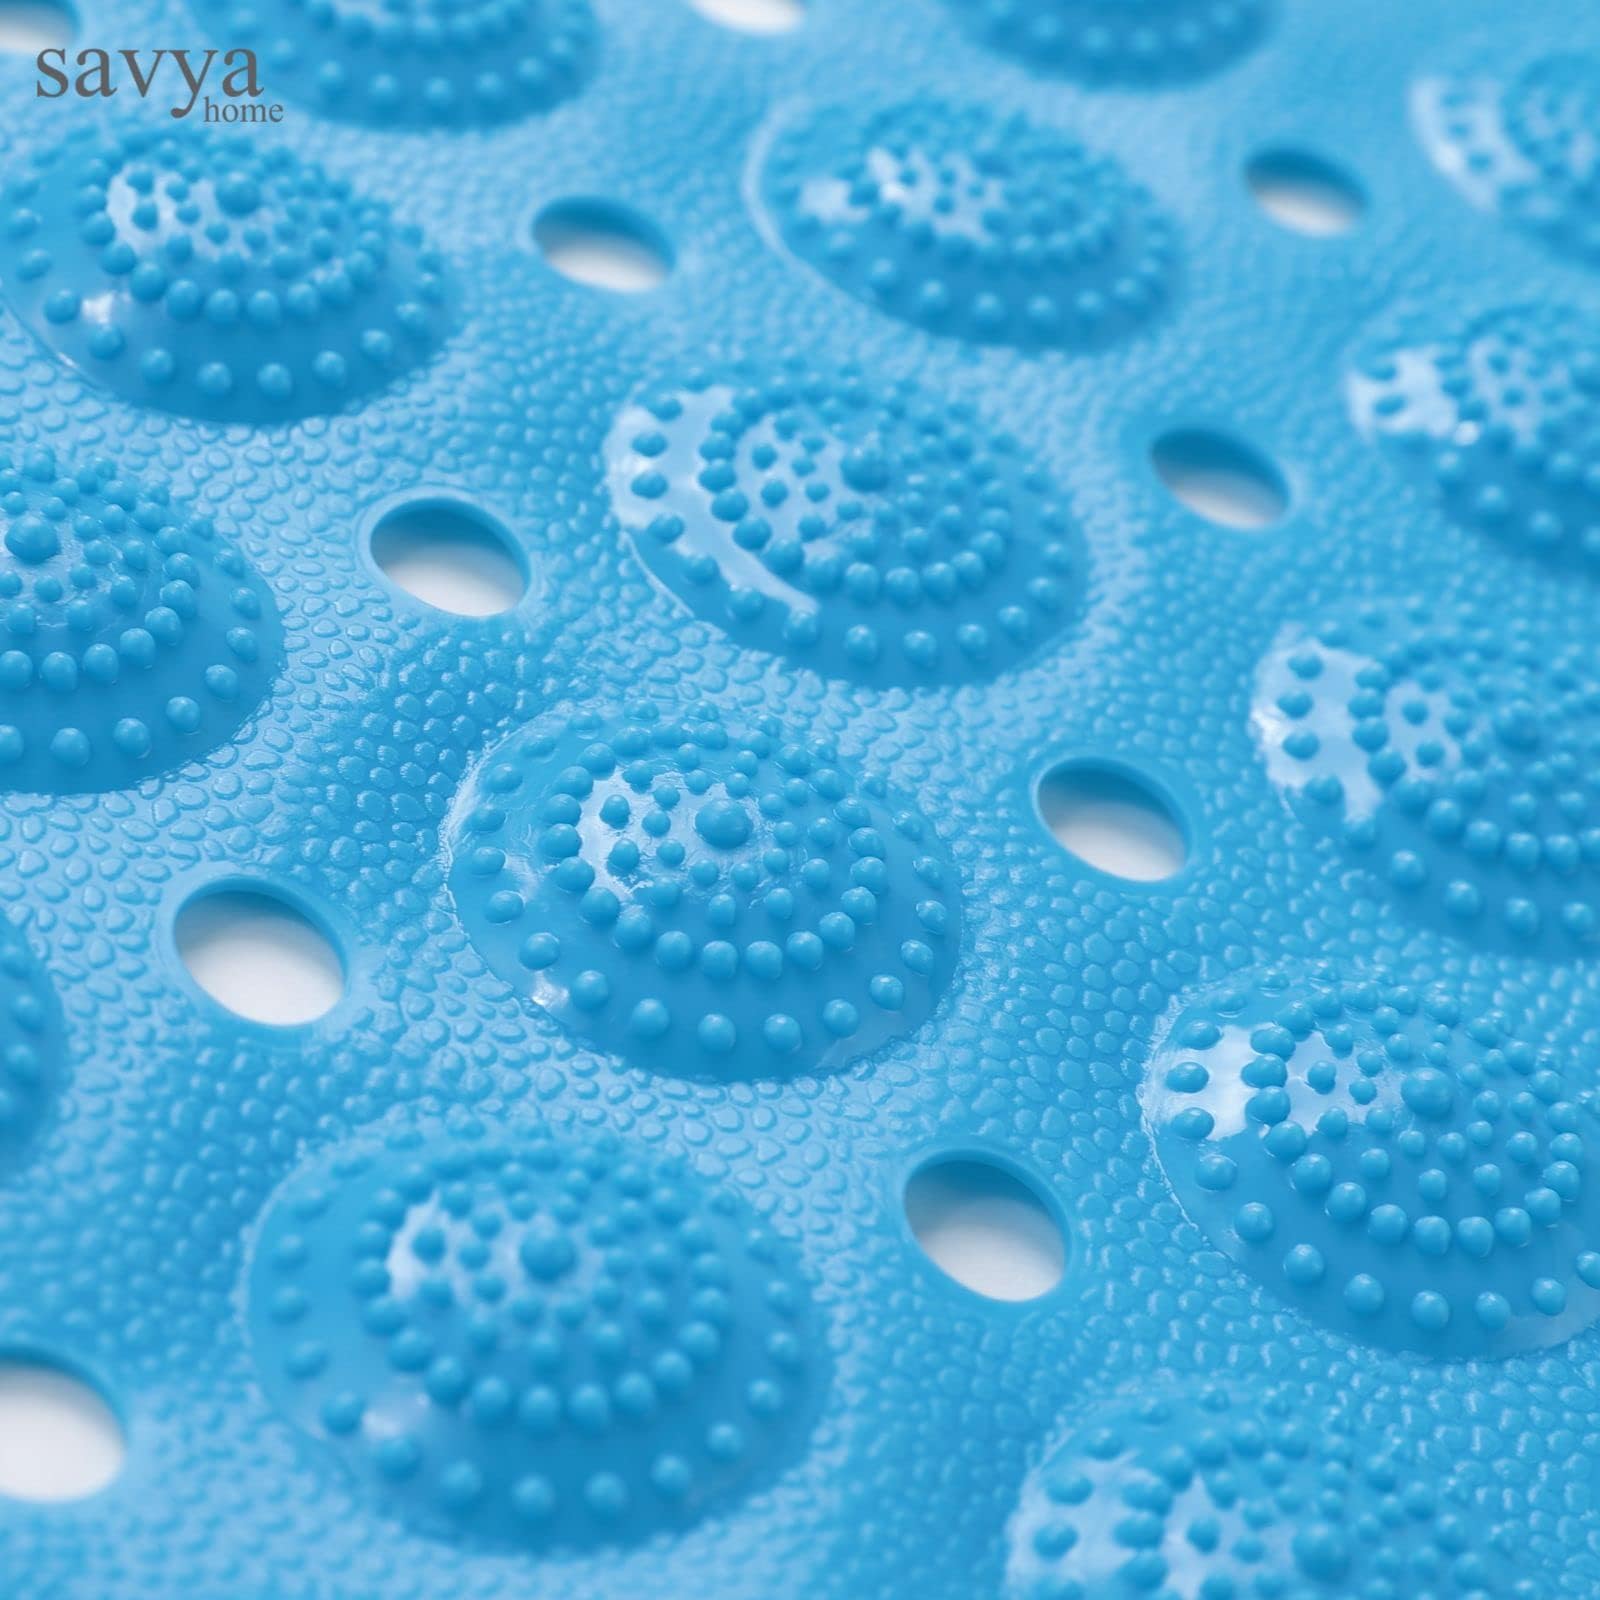 Savya Home Pack of 2 Diatom Mud Bathroom Floor Mat |71 x 35.5 cm|PVC Accu-Pebble Soft & Light Weight Anti-Skid Mat for Living Room,Bathroom/Shower Mat/Multipurpose (Blue)